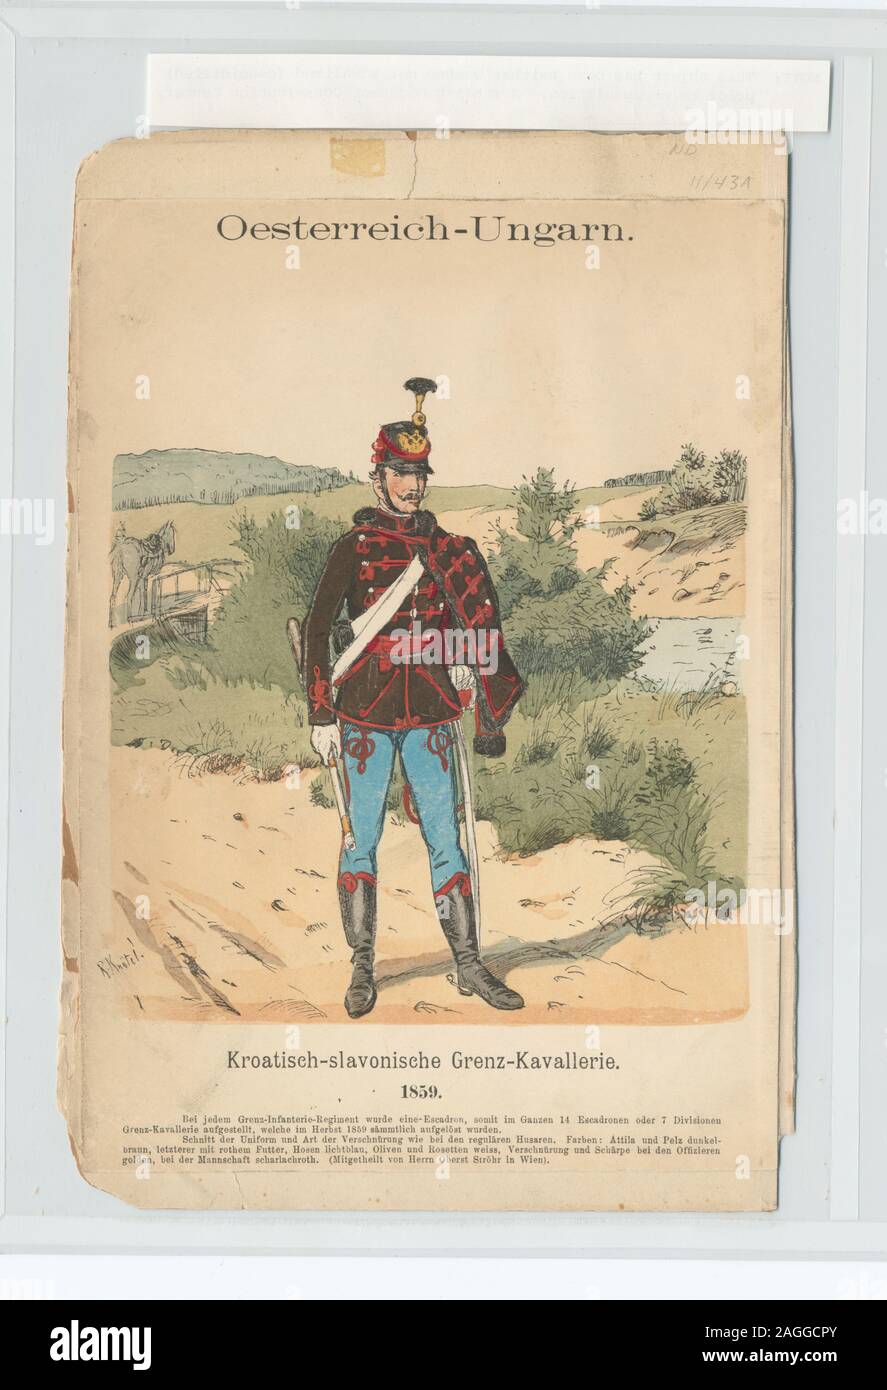 Ownership : Draper Fund [Reiffenstein seems to be the printer for all of Gerasch's lithographs] Croatian-Slavonian frontier cavalry, 1859 (Knötel); Kroatisch-slavonische Grenz-Kavallerie, 1859 Stock Photo